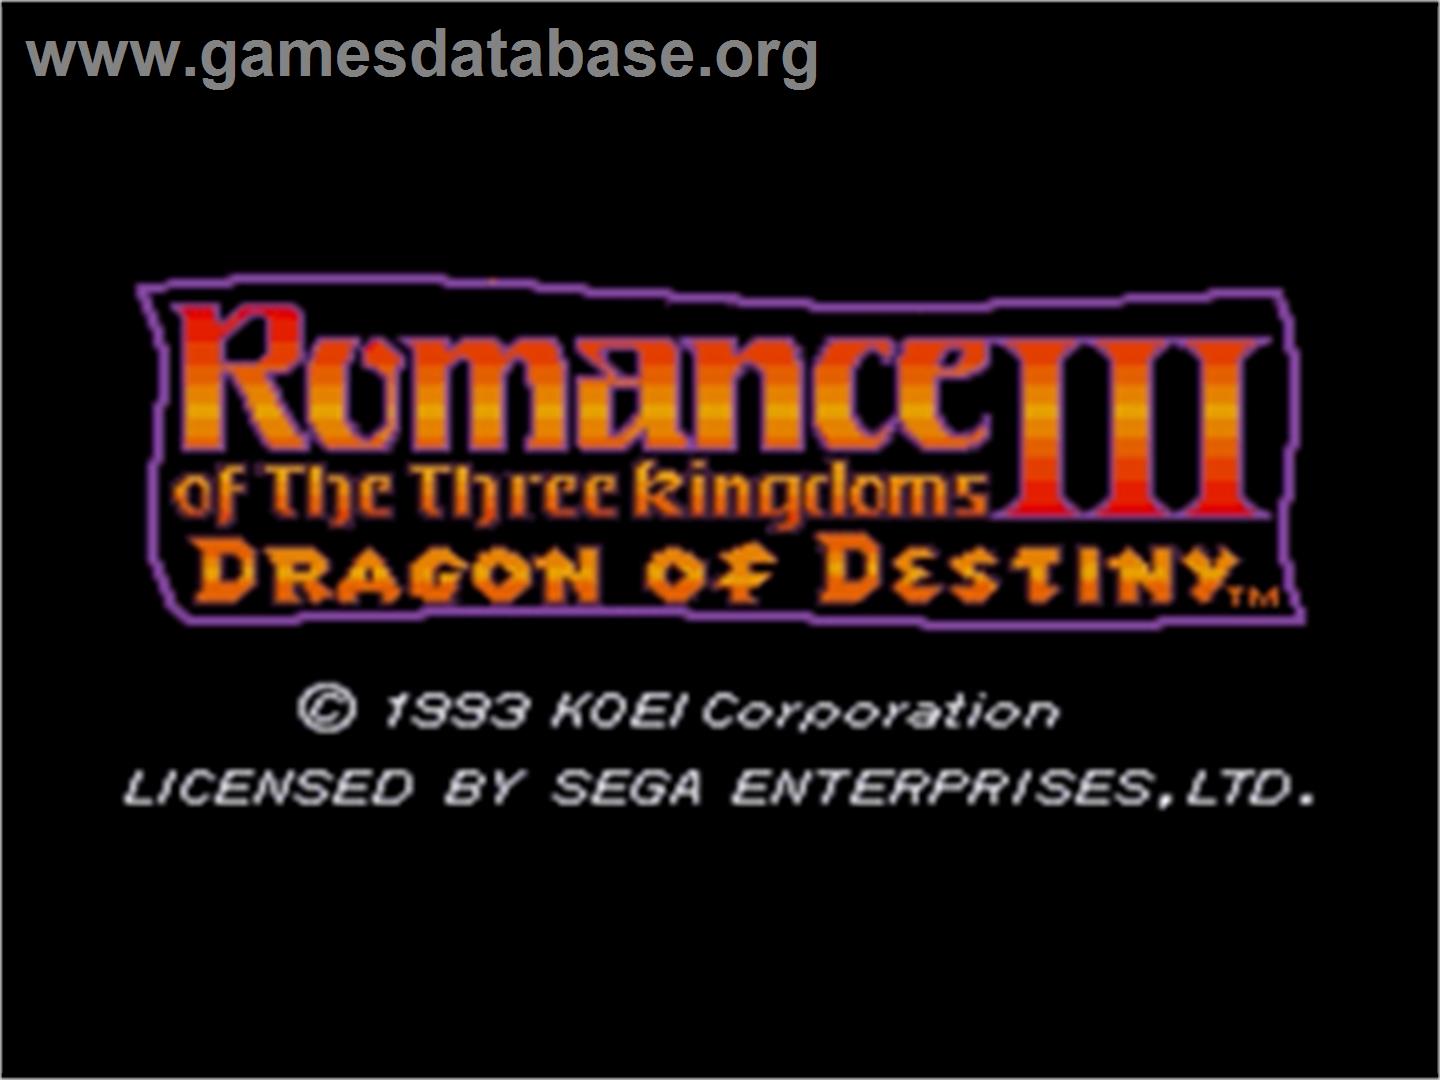 Romance of the Three Kingdoms III: Dragon of Destiny - Sega Nomad - Artwork - Title Screen